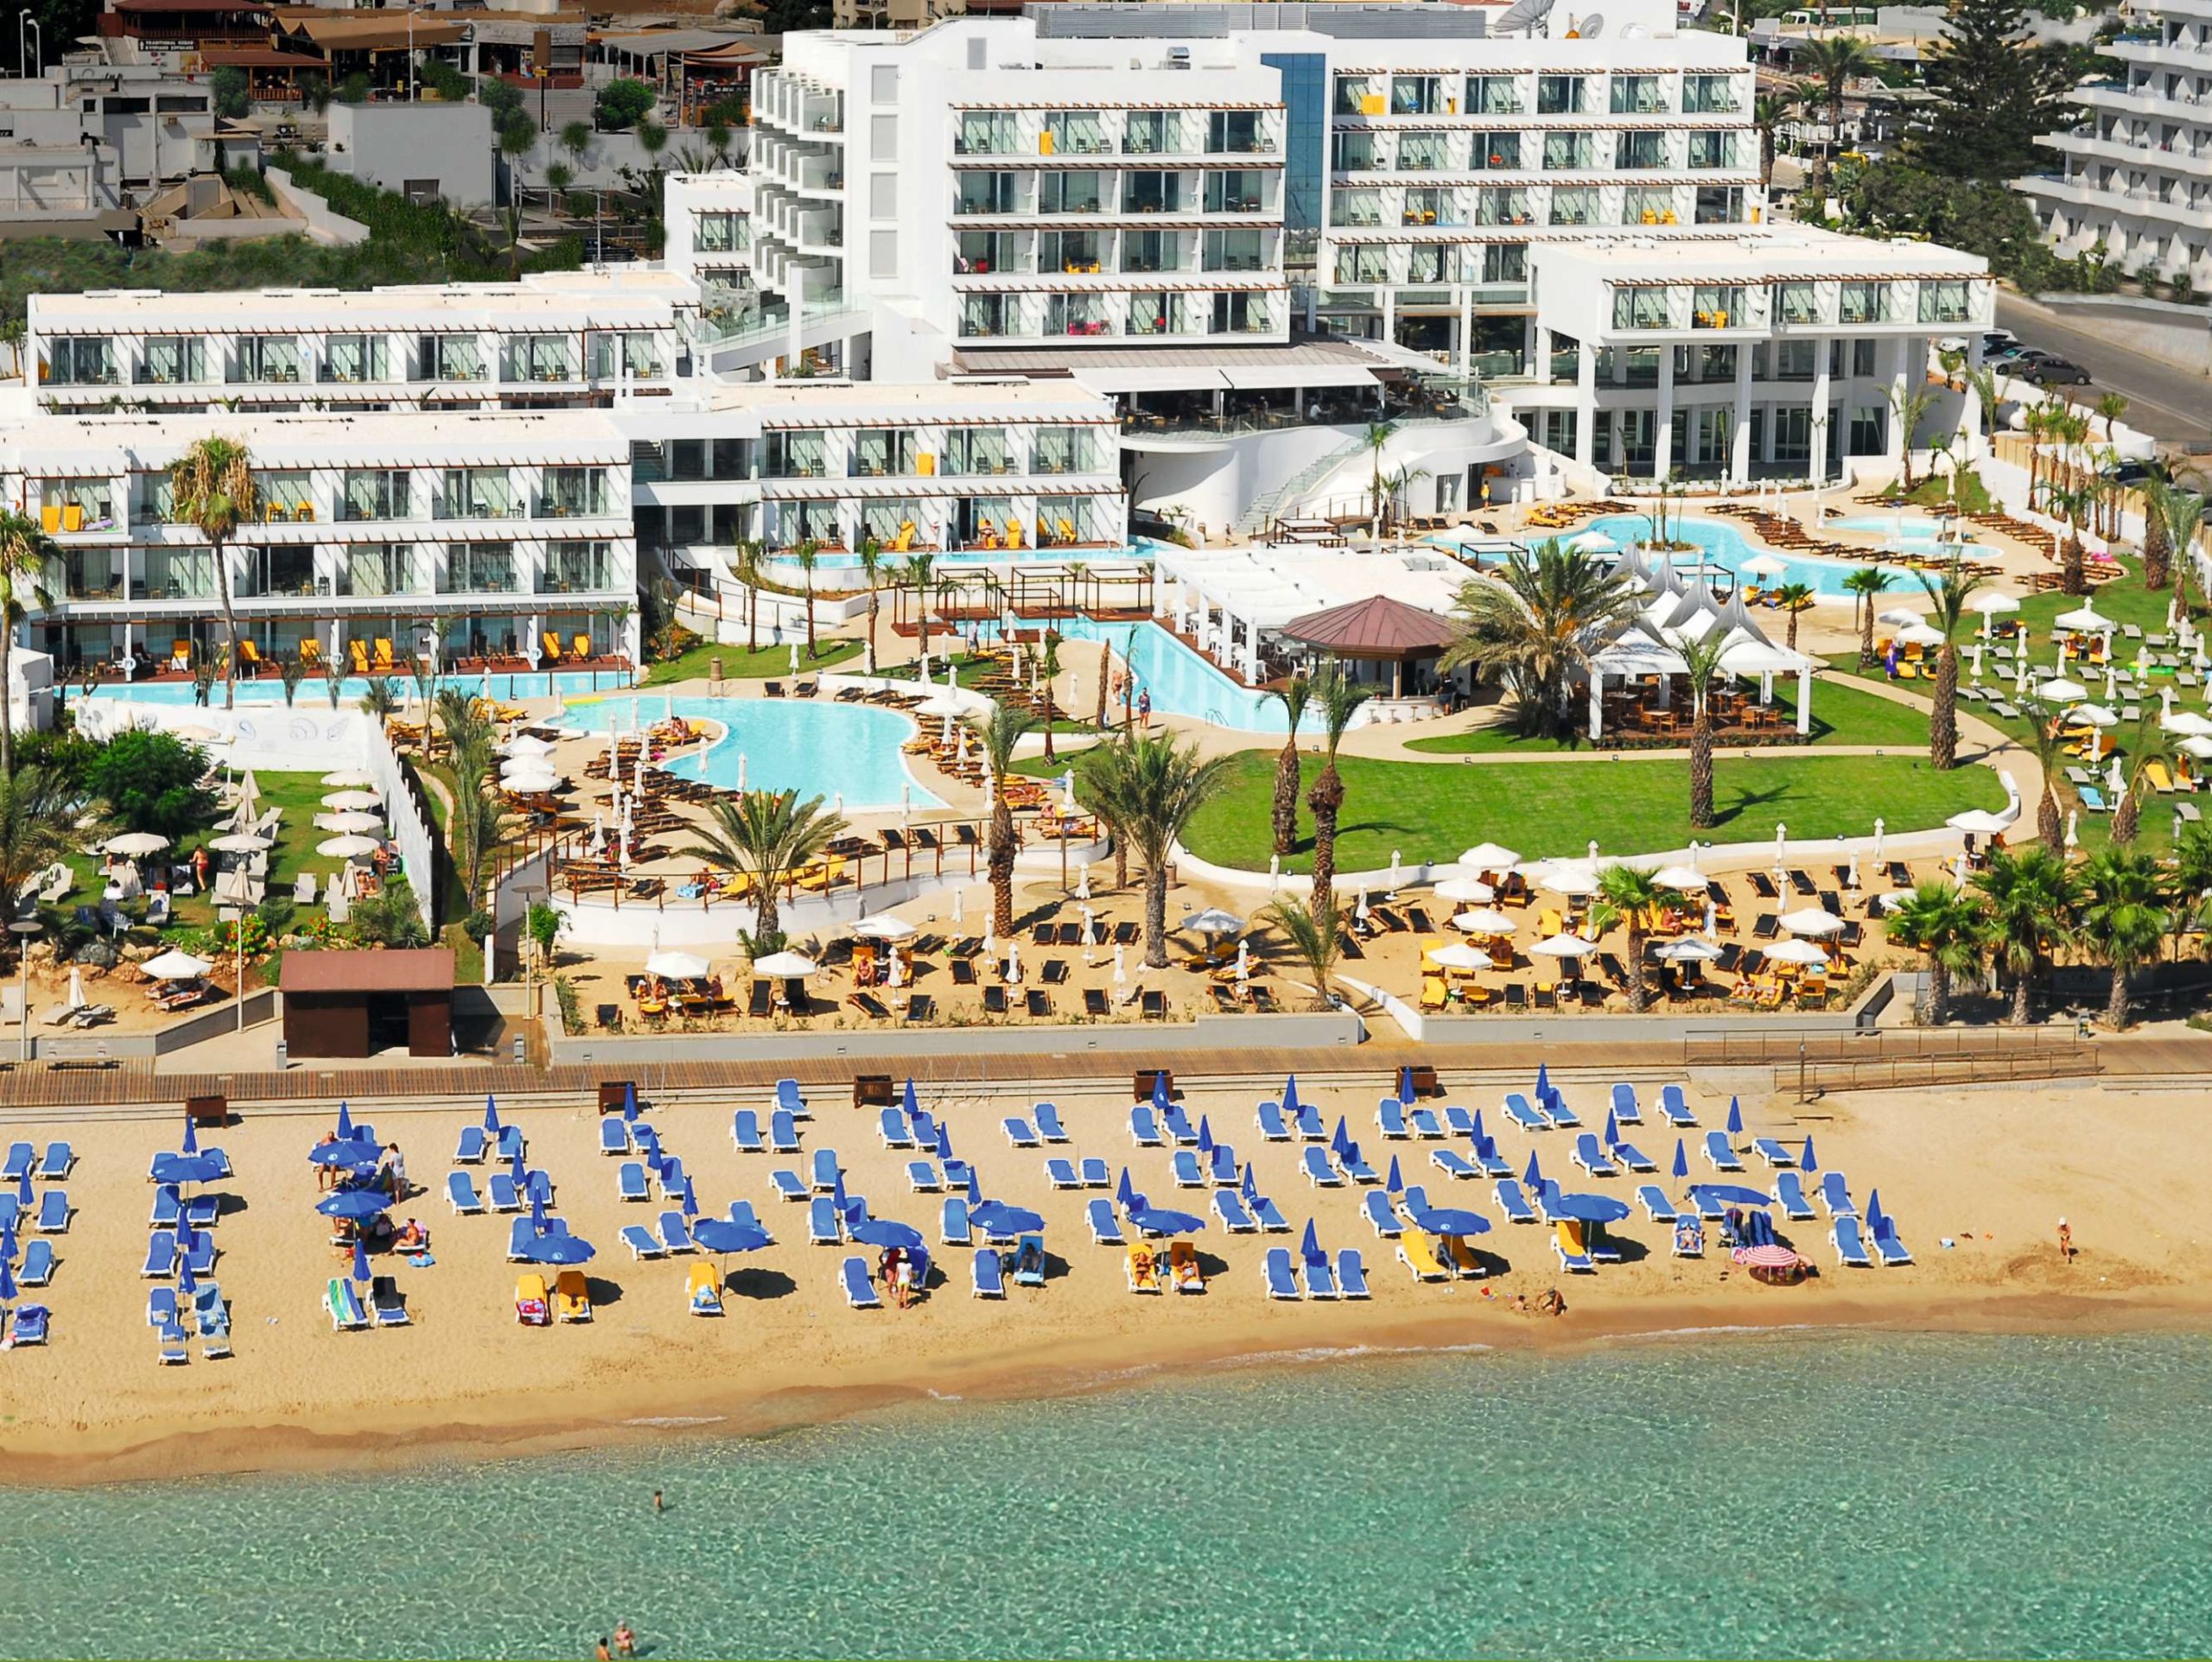 Sunrise Pearl Hotel & Spa, Protaras, Zypern